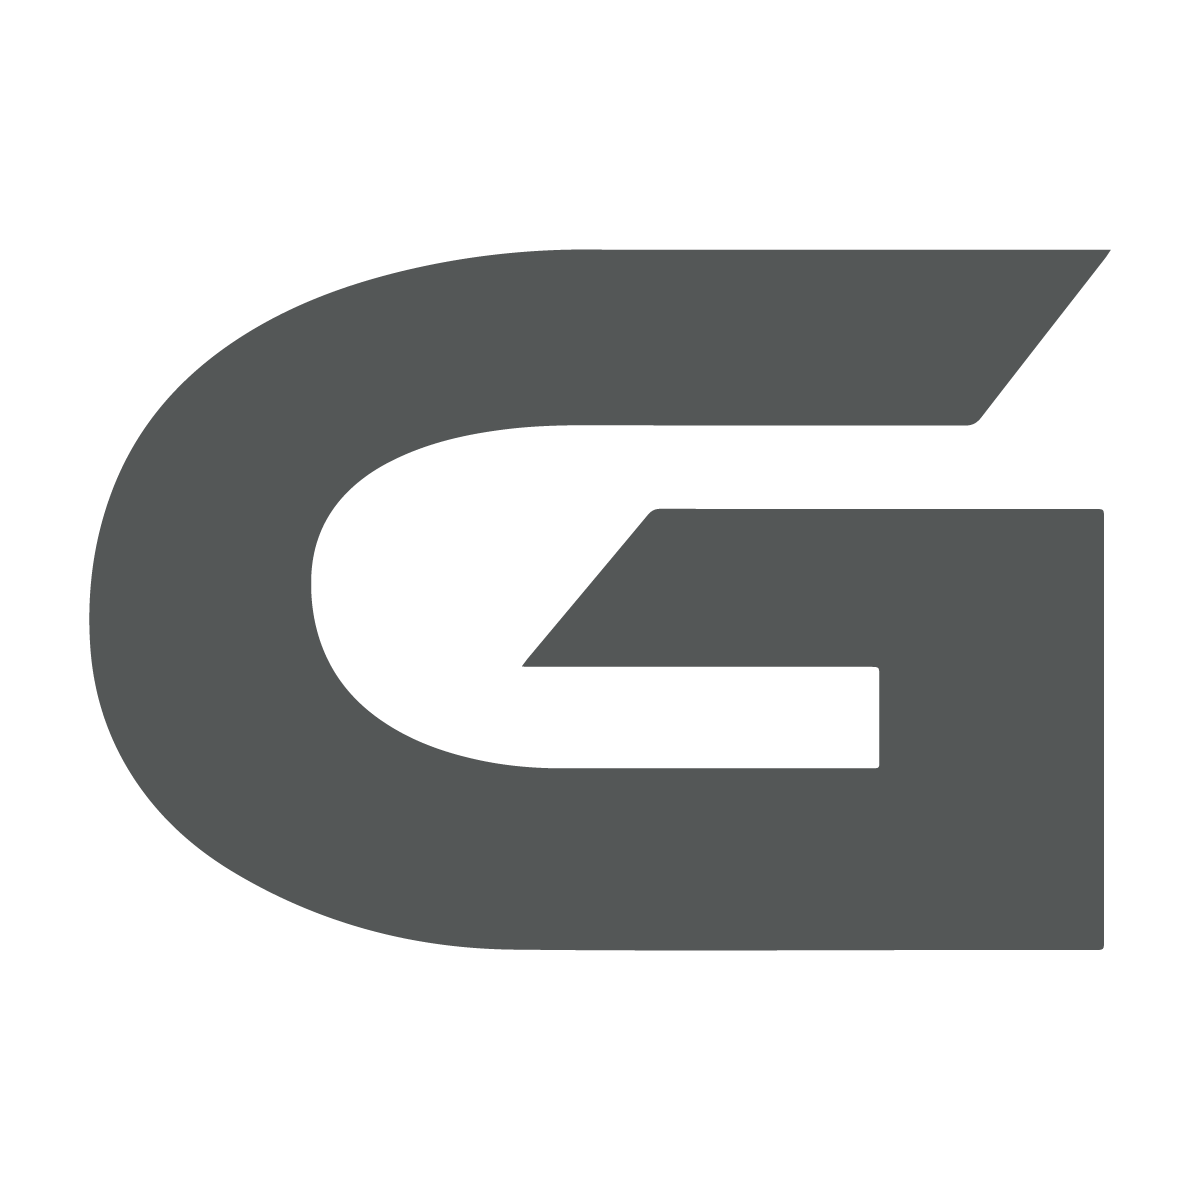 gmw 2020 logo gray